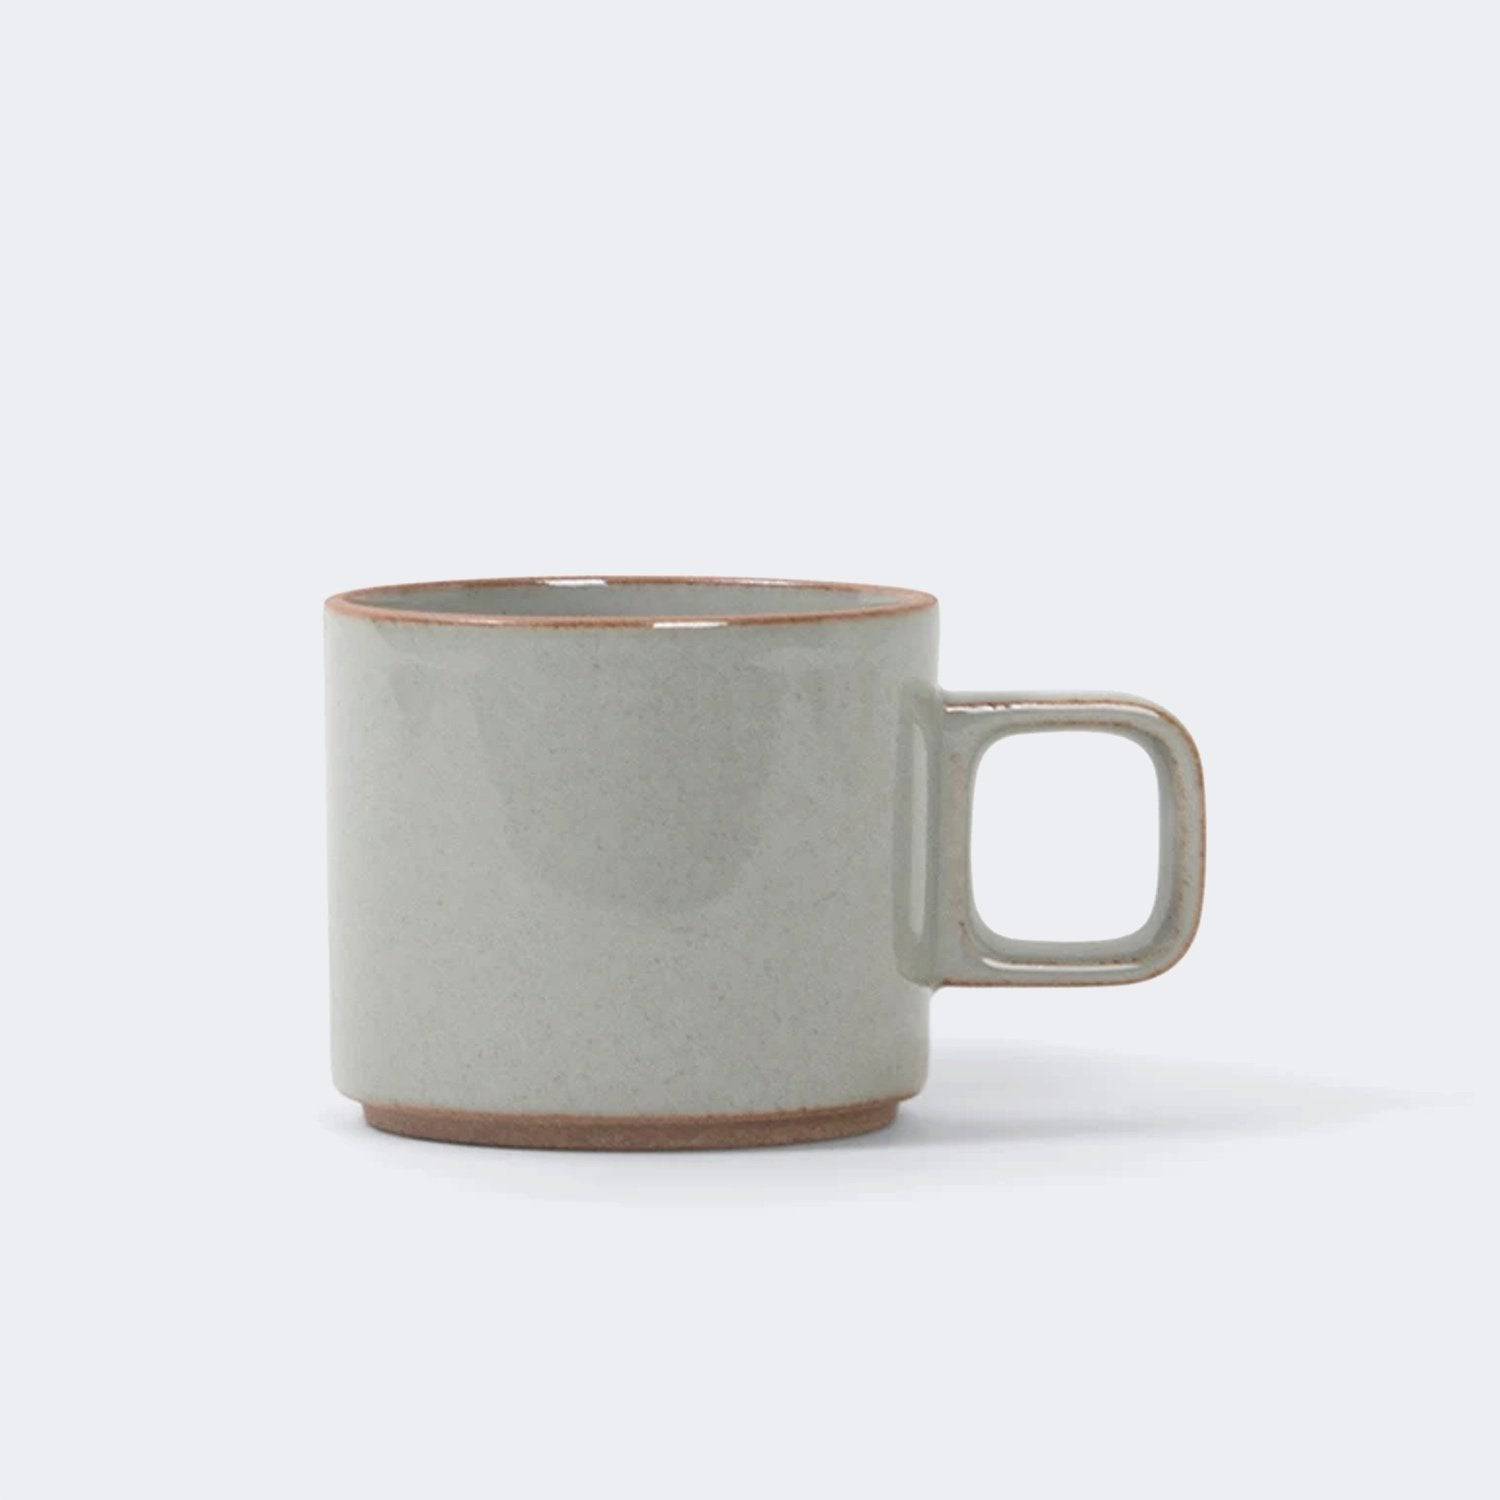 Hasami Porcelain Mug in Gloss Gray 11 oz. - KANSO#select size_11 oz.